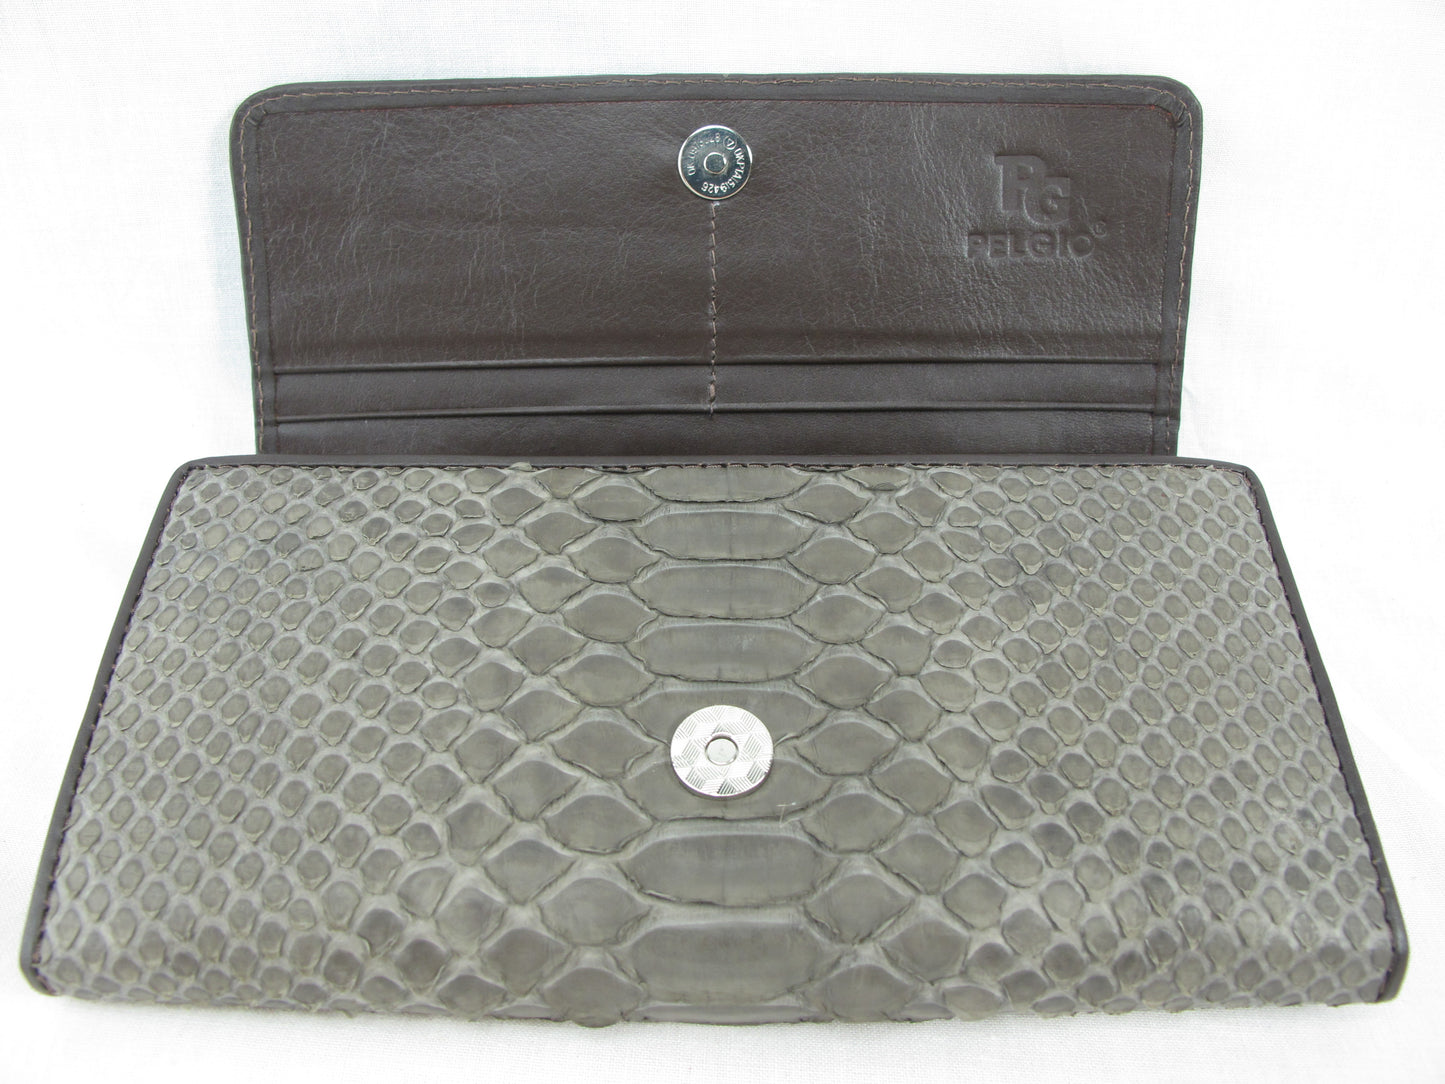 Genuine Python Snake Belly Skin Leather Women's Clutch Wallet Wristlet Purse